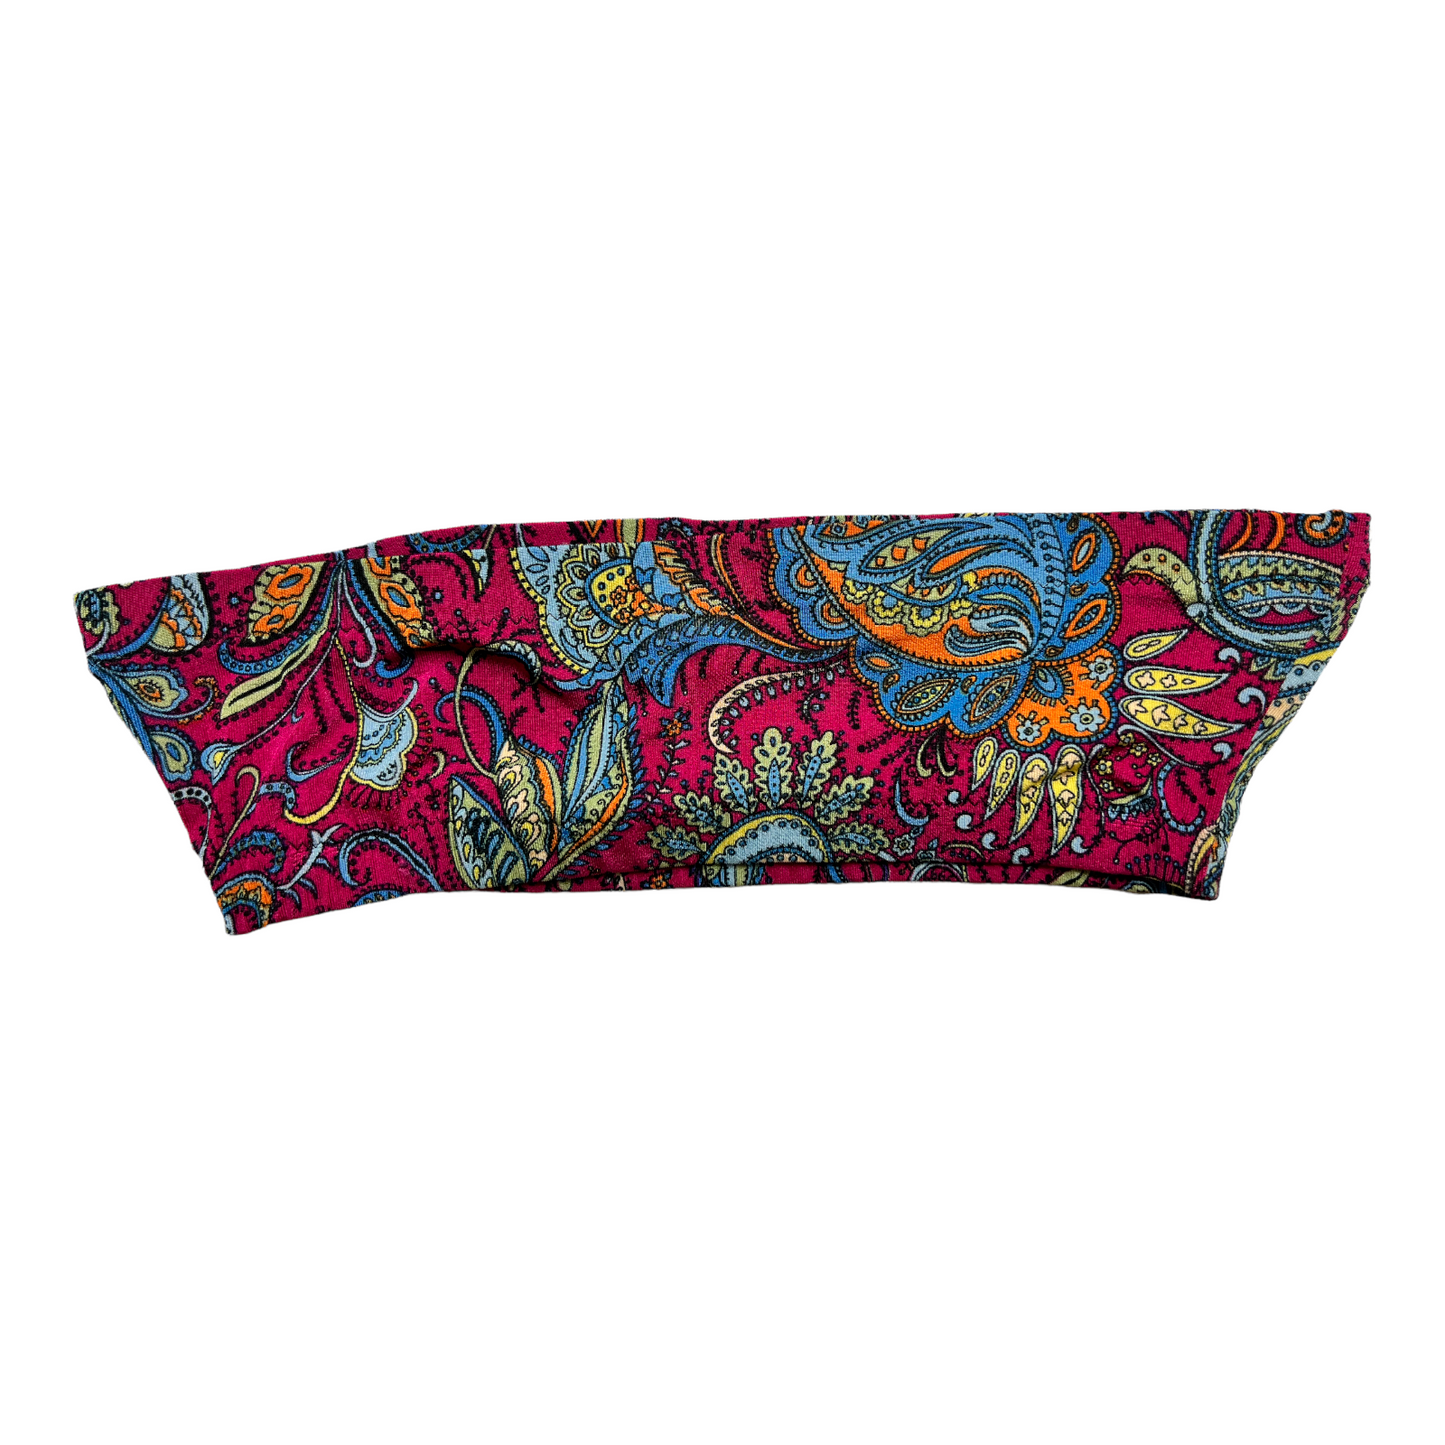 New Extreme Gear Plum Multi Color Strapless Bralette Swimwear Top, Size M